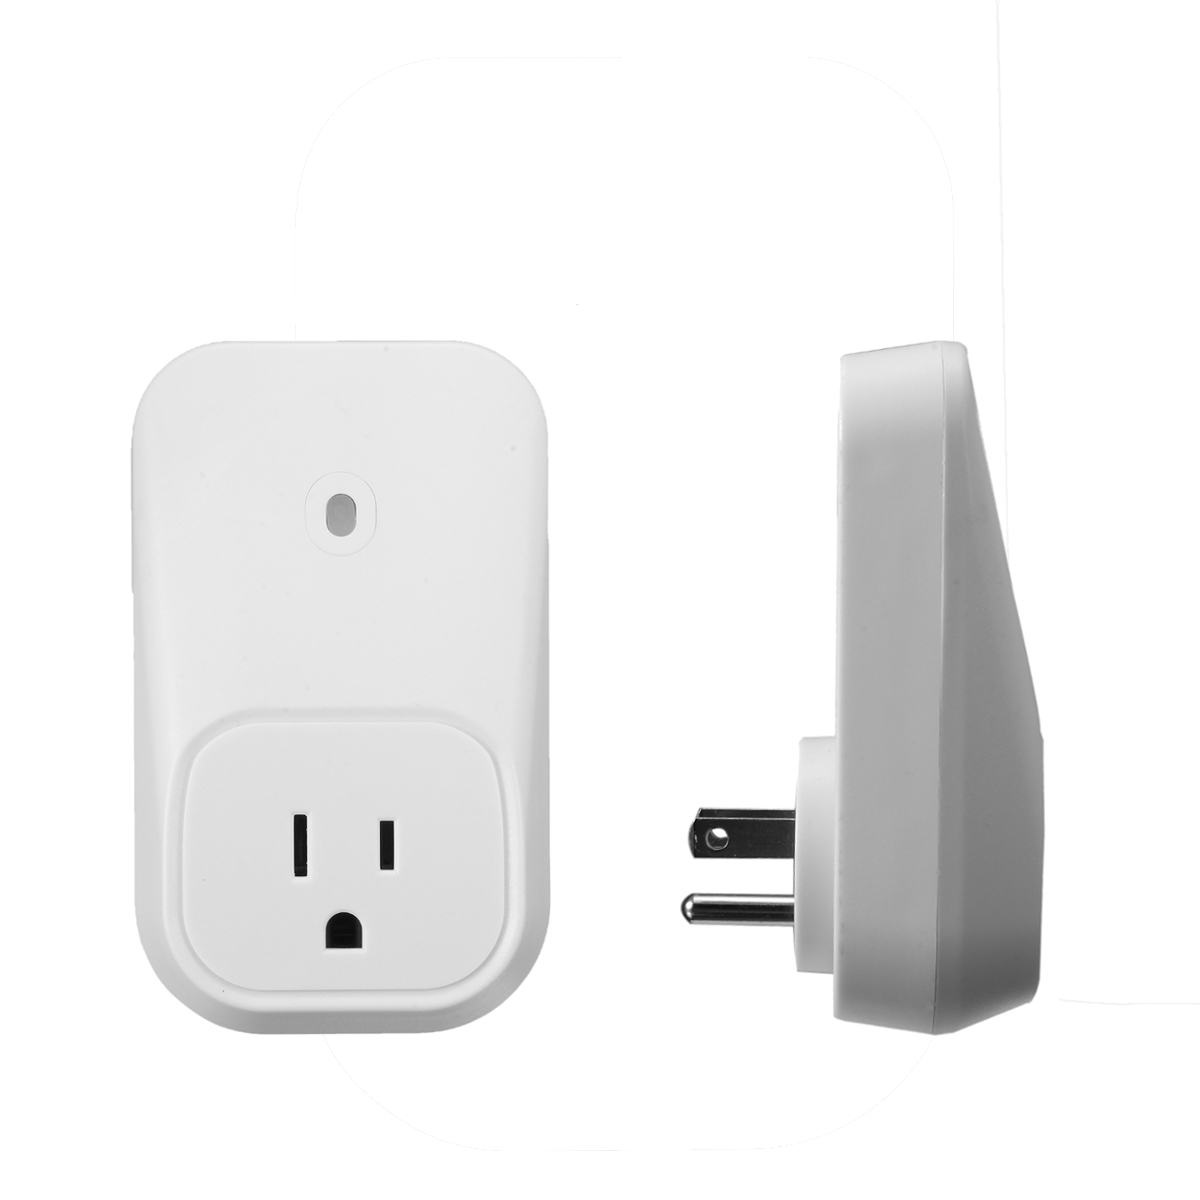 WiFi-Smart-Socket-Charger-Wireless-Remote-Control-Socket-Plug-Adapter-US-EU-UK-Wall-Plug-for-Smart-P-1123467-10